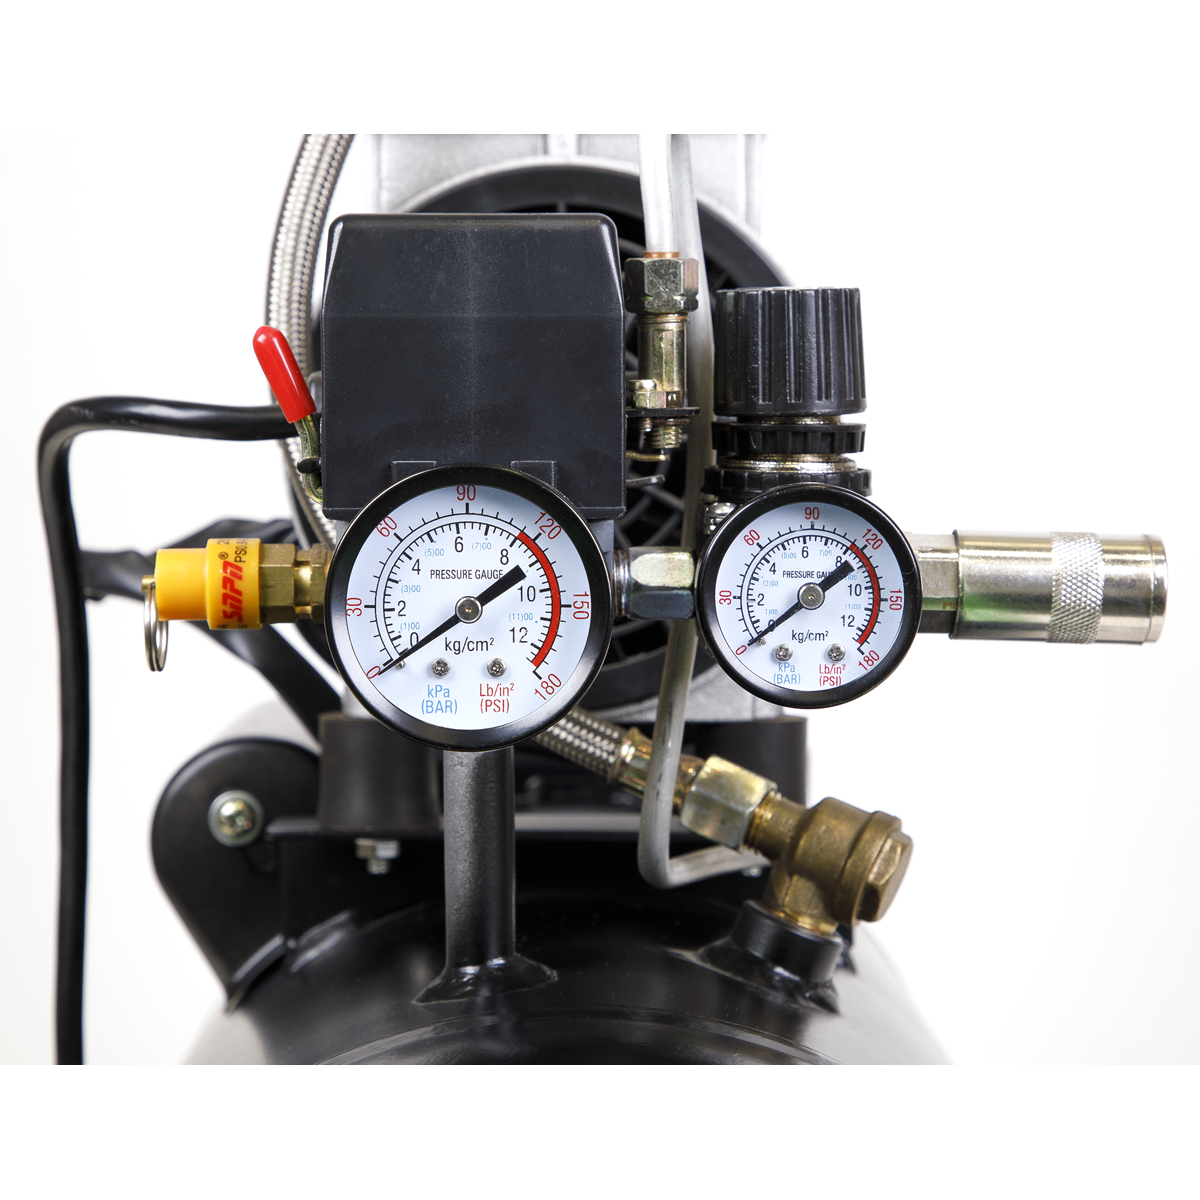 Sealey workshop/garage air compressor